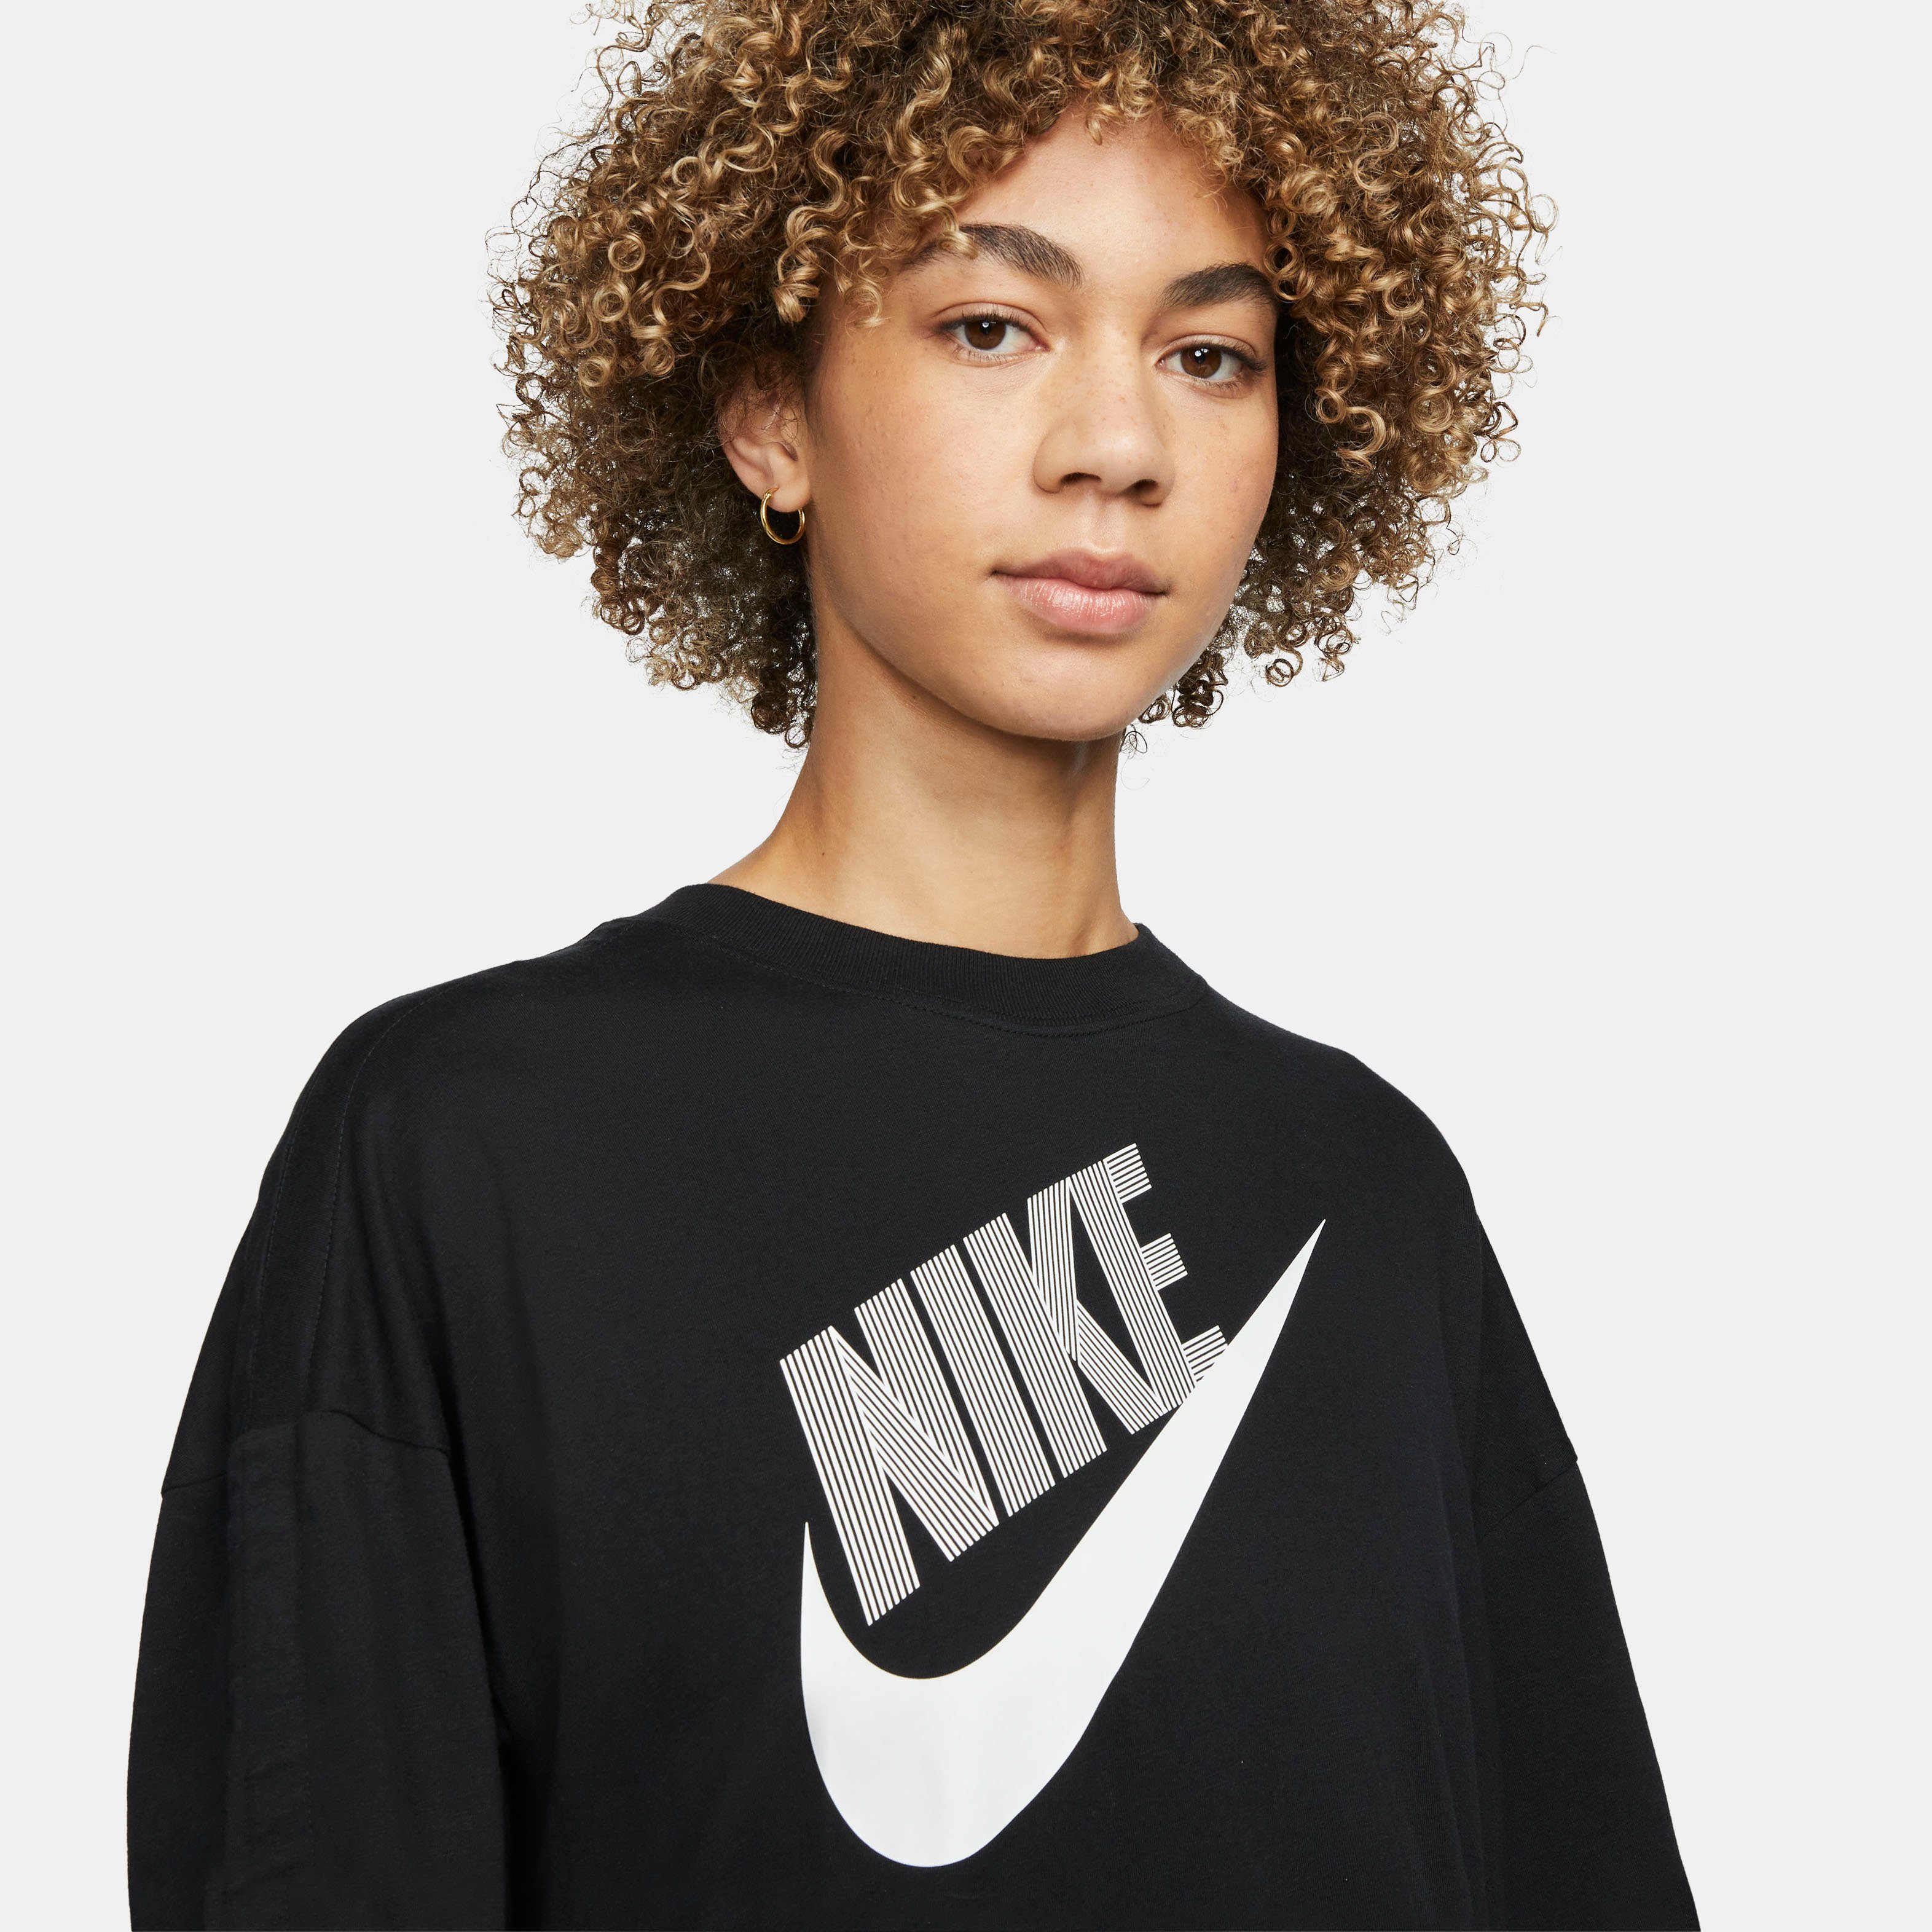 Nike Sportswear T-Shirt SS TOP NSW BLACK DNC W